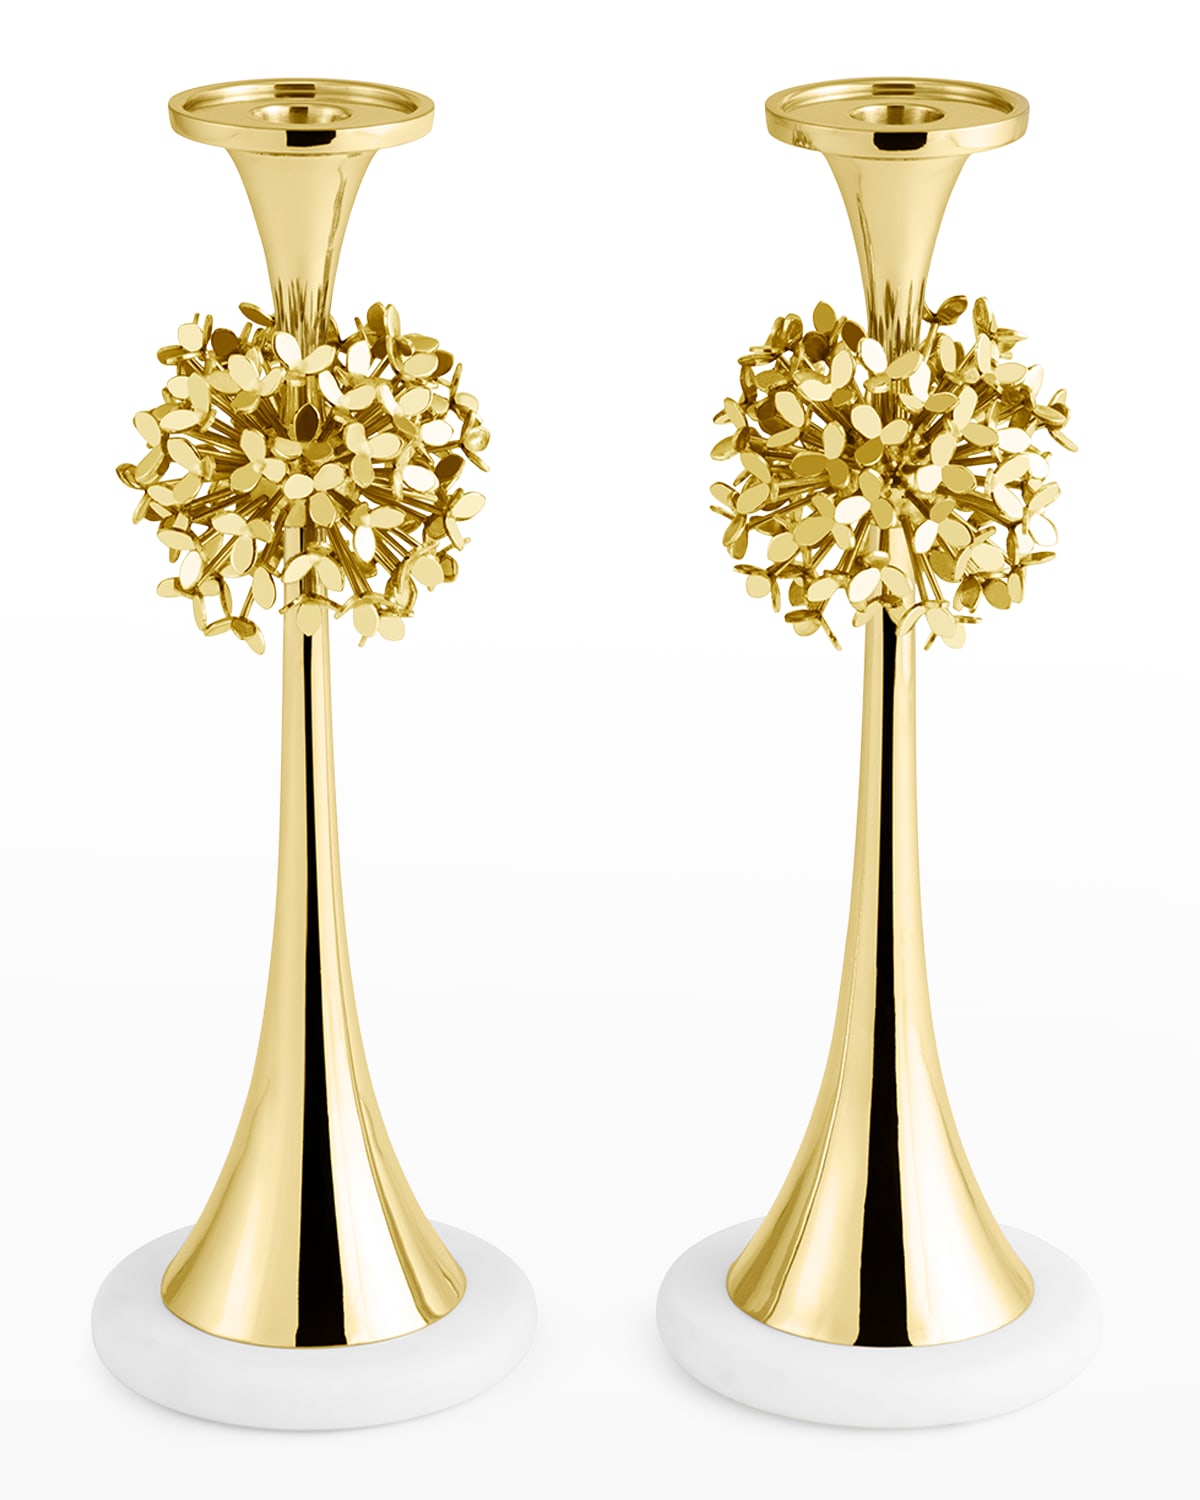 Michael Aram Dandelion 2-piece Candleholder Set In Gold